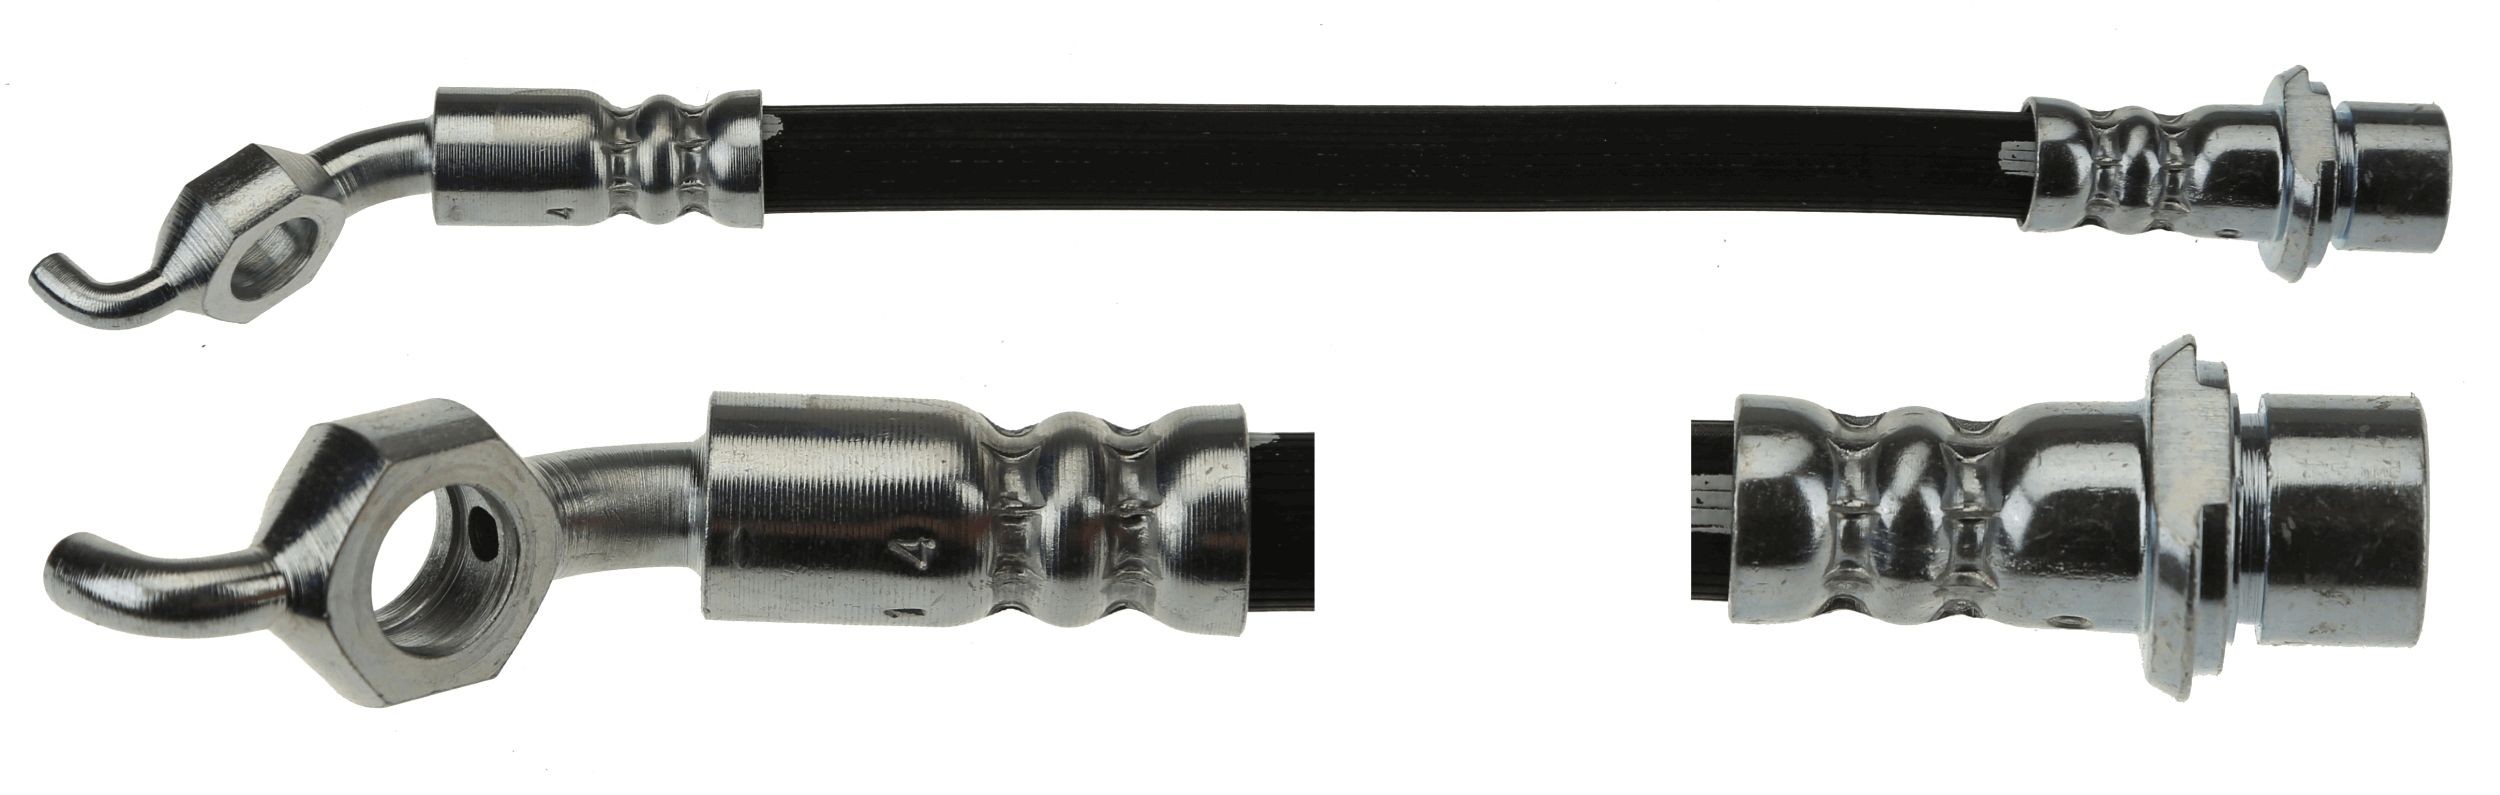 TRW 194 mm, M10x1, Internal Thread Length: 194mm, Thread Size 1: M10x1, Thread Size 2: Banjo Brake line PHD1166 buy